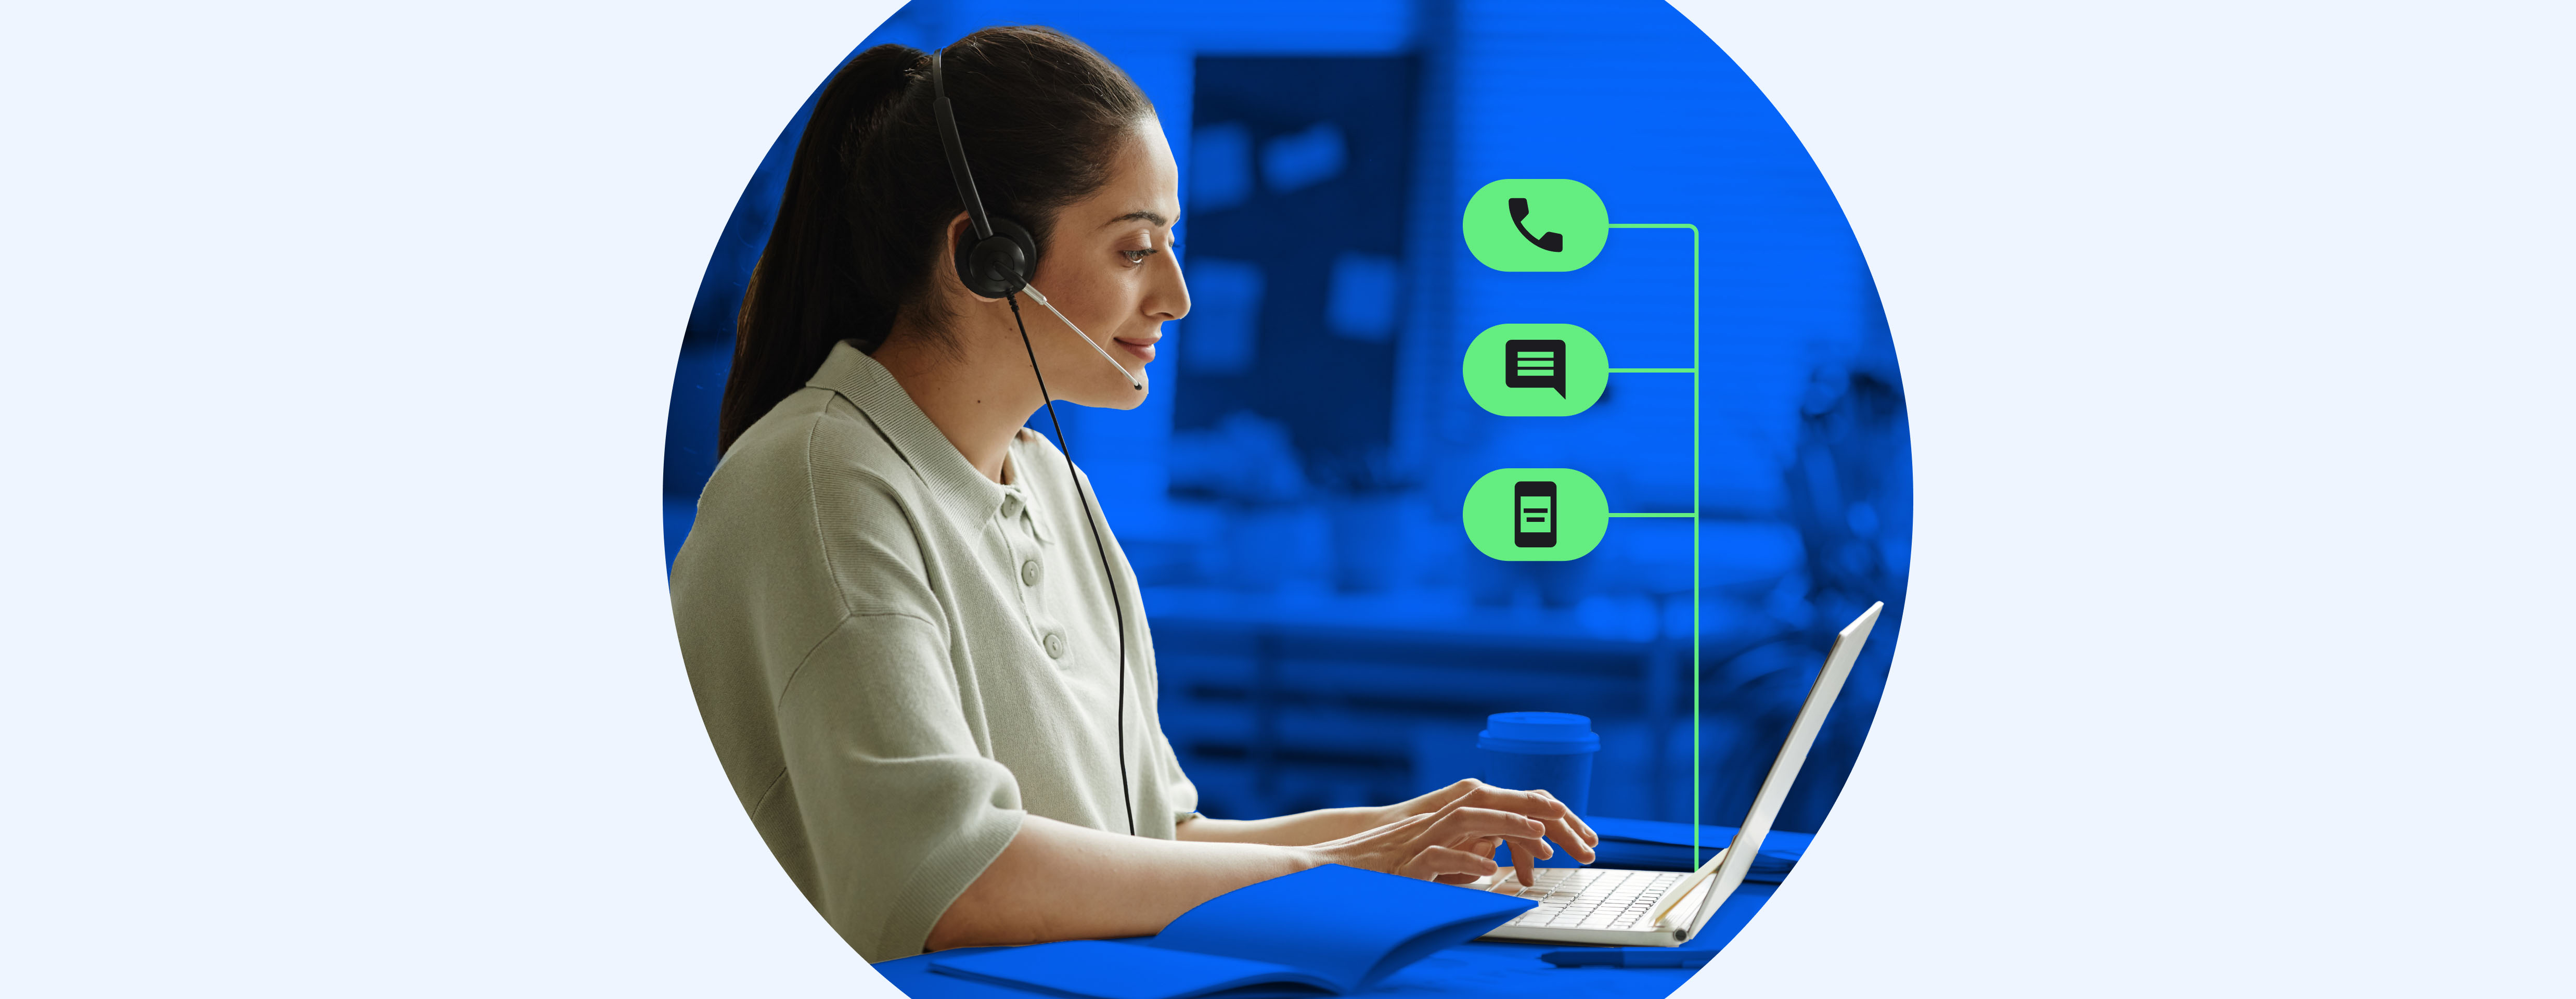 customer communication management software cover image